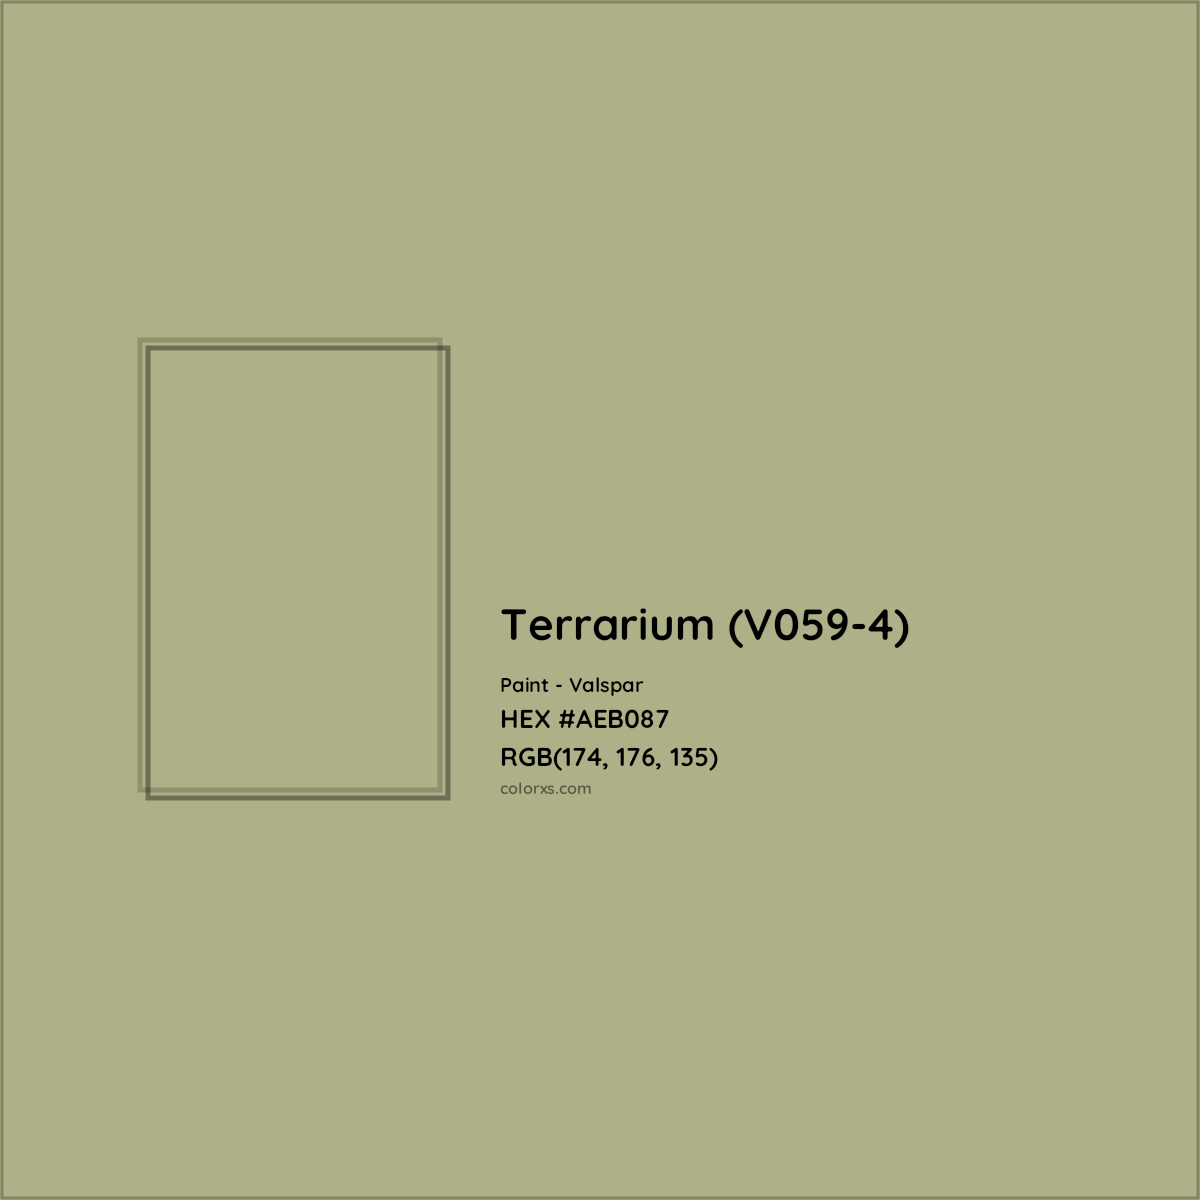 HEX #AEB087 Terrarium (V059-4) Paint Valspar - Color Code